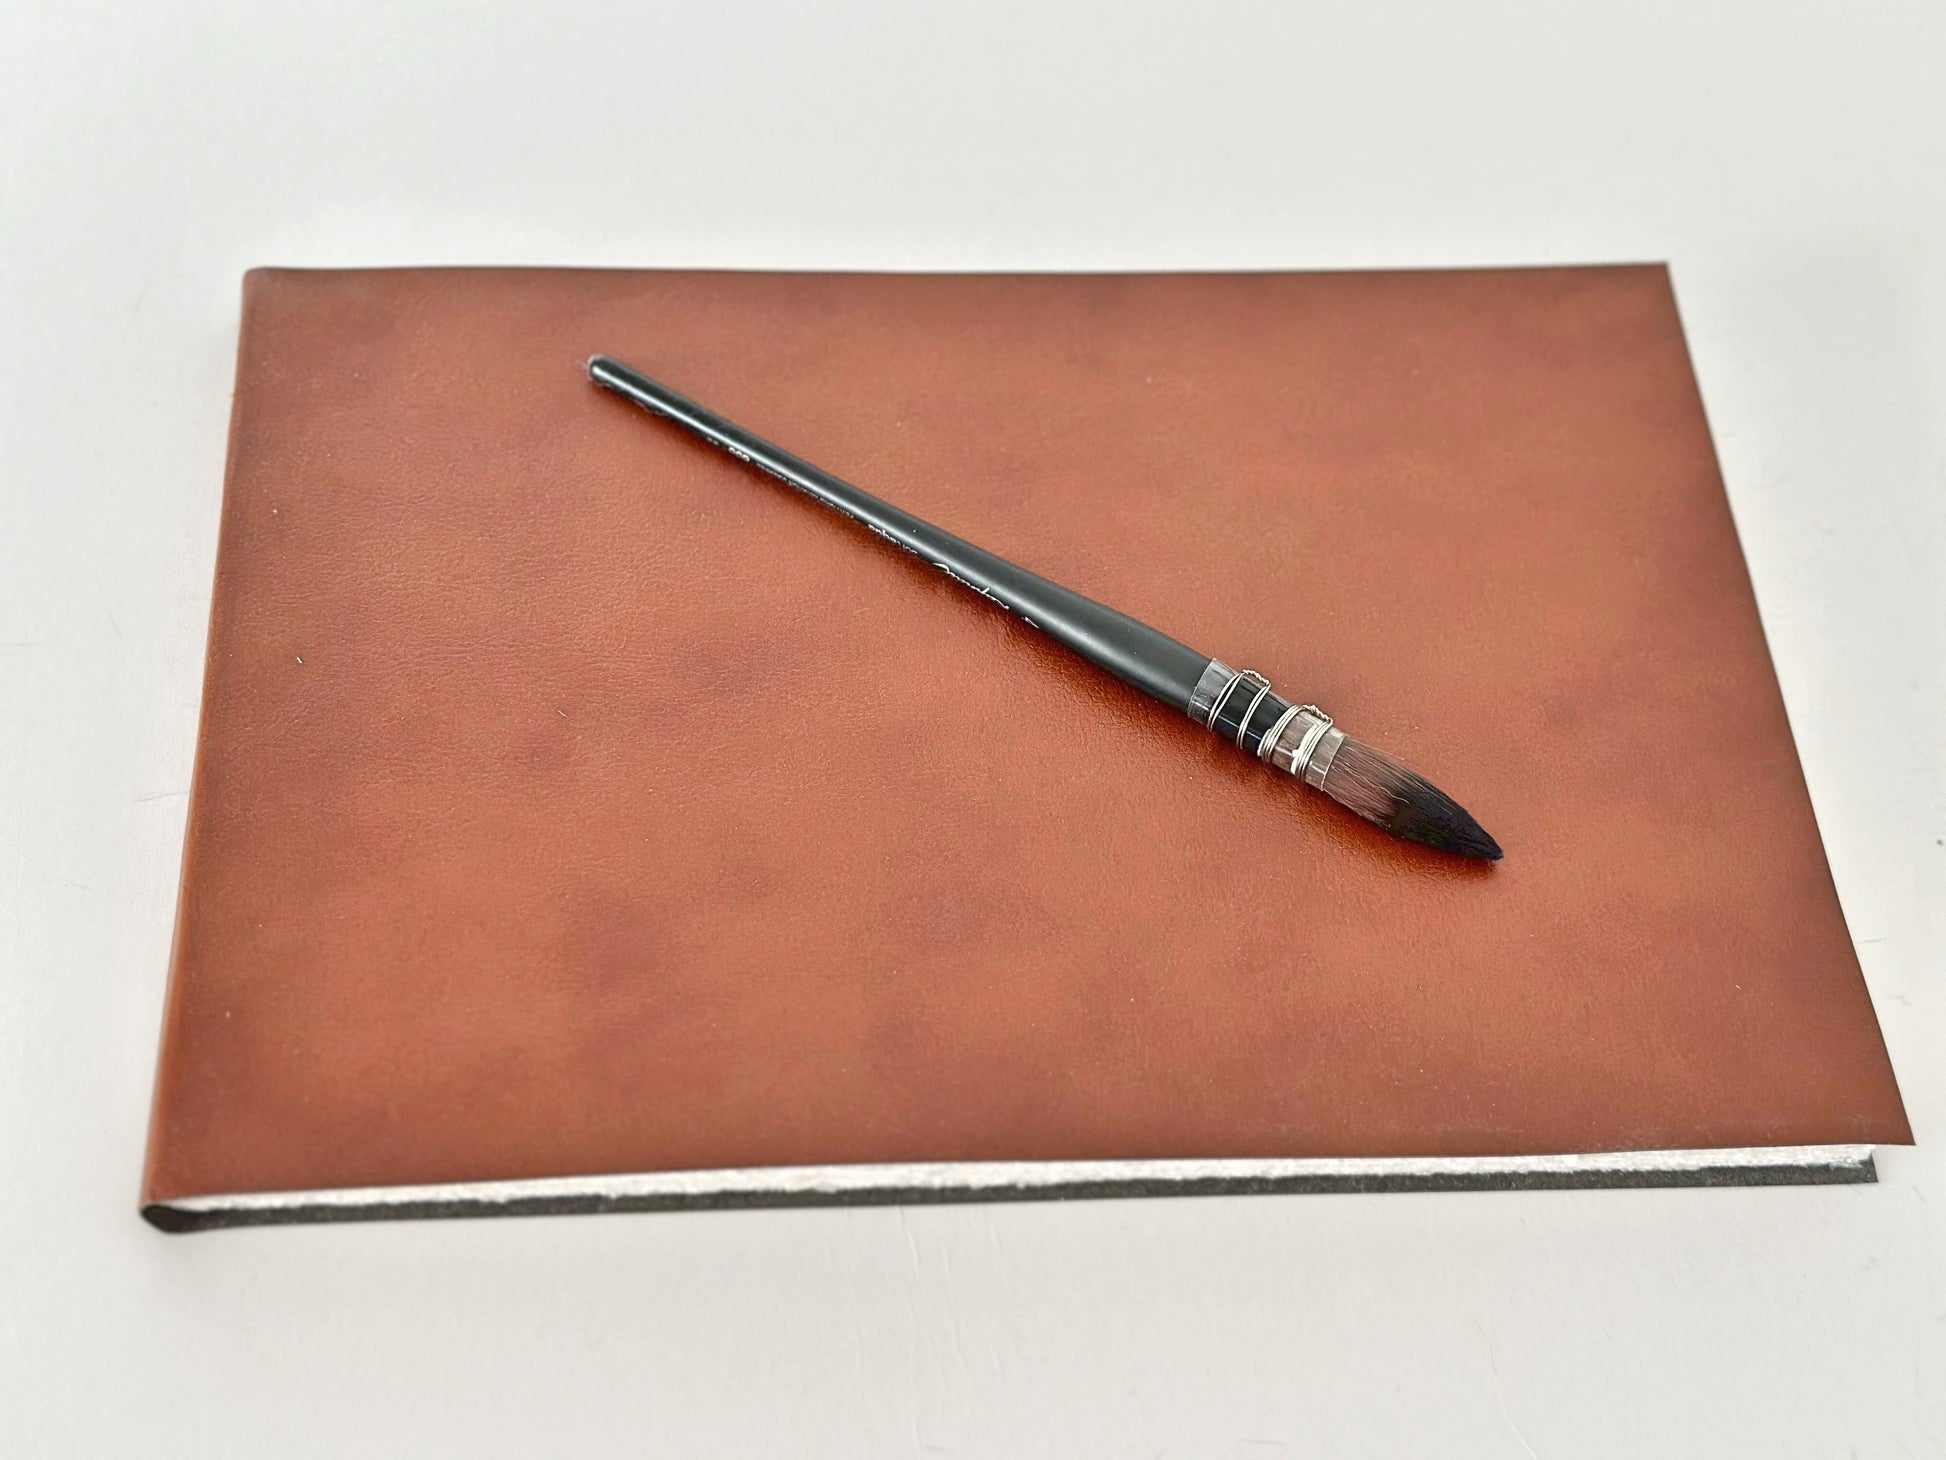  Largest Leather Artist Sketchbook Journal 18 x 14